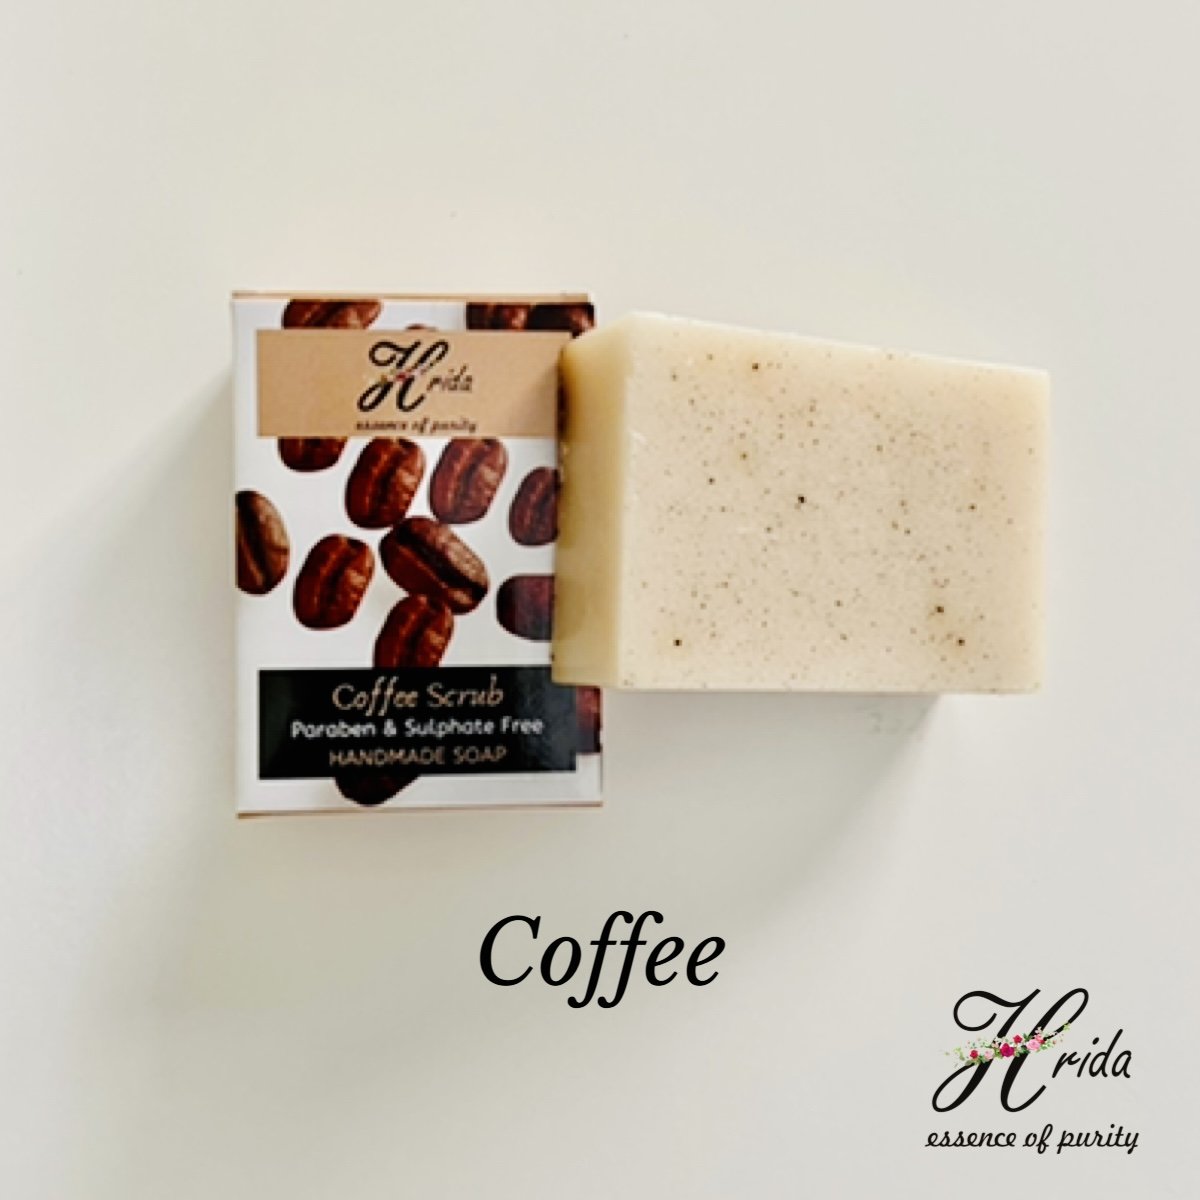 Hrida Coffee Handmade Soap - hfnl!fe